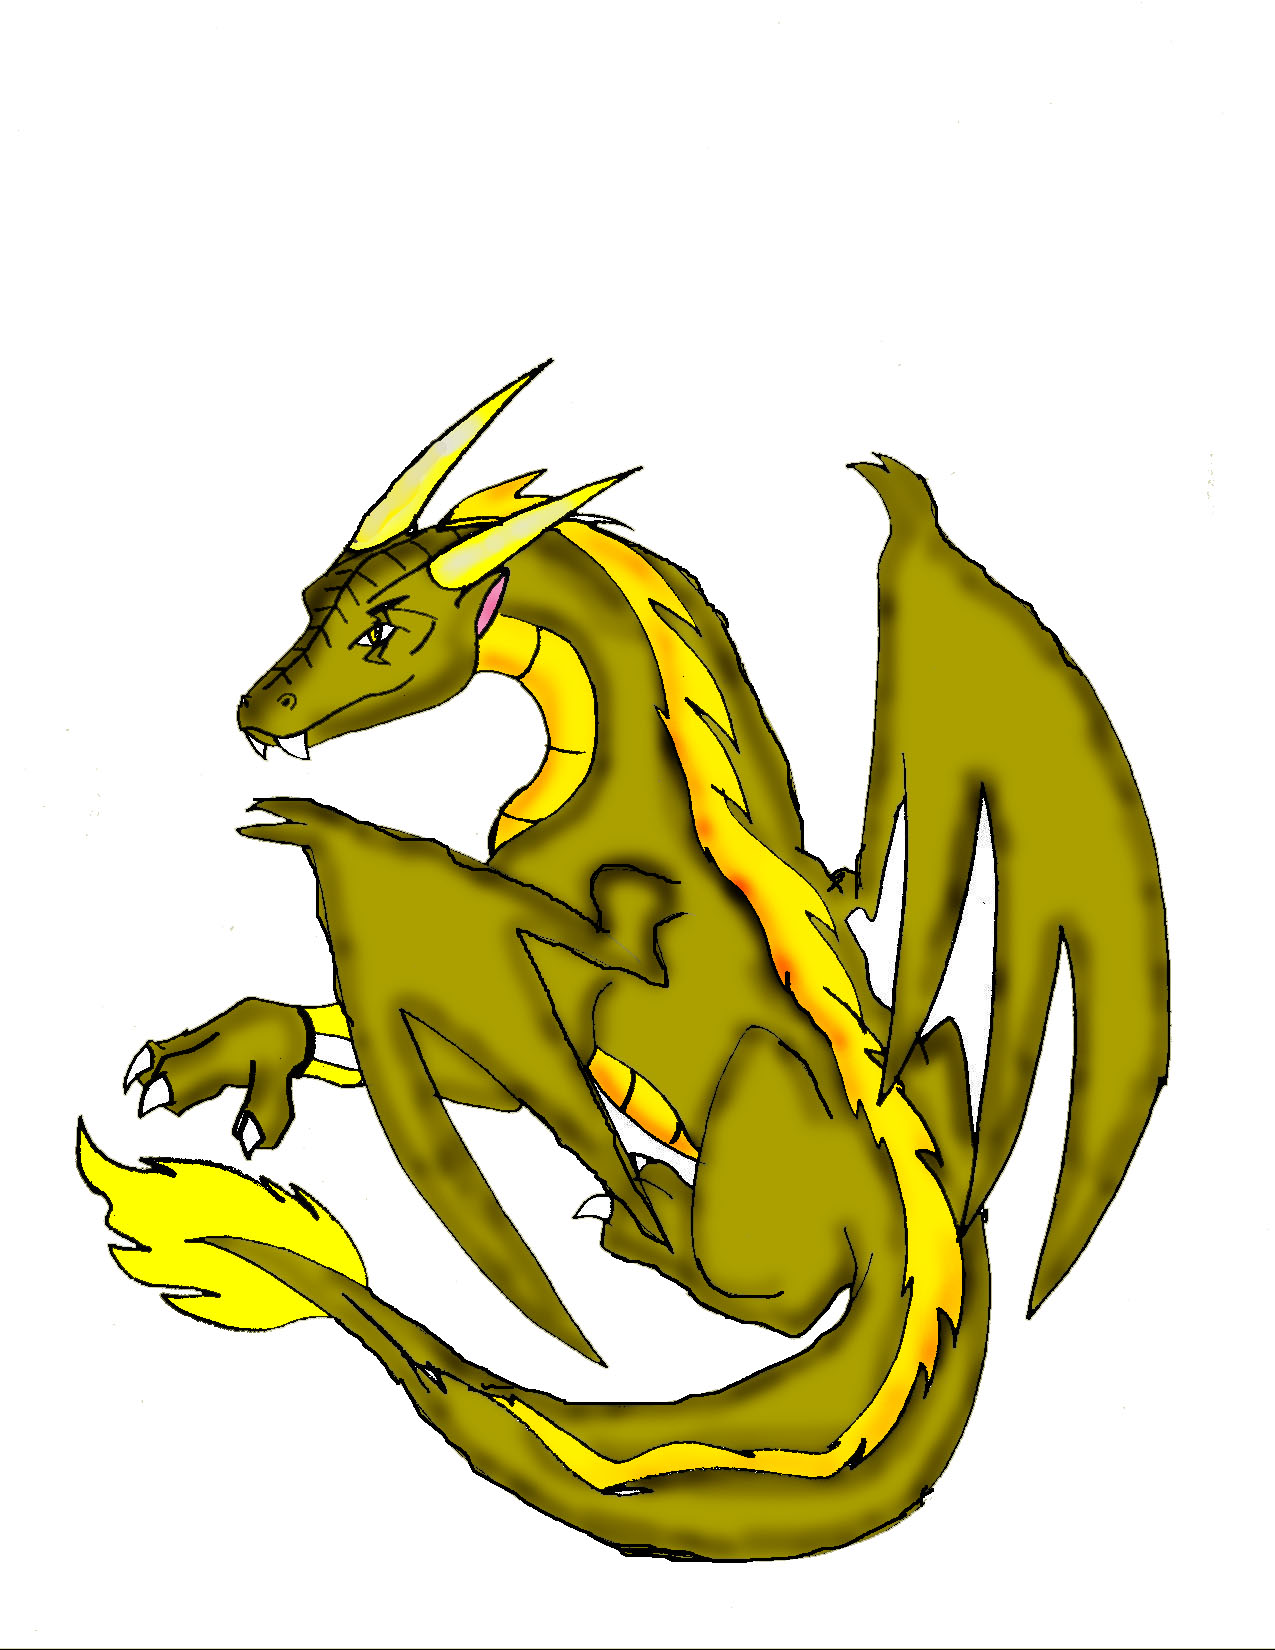 Ryker's Dragon Form by crocdragon89